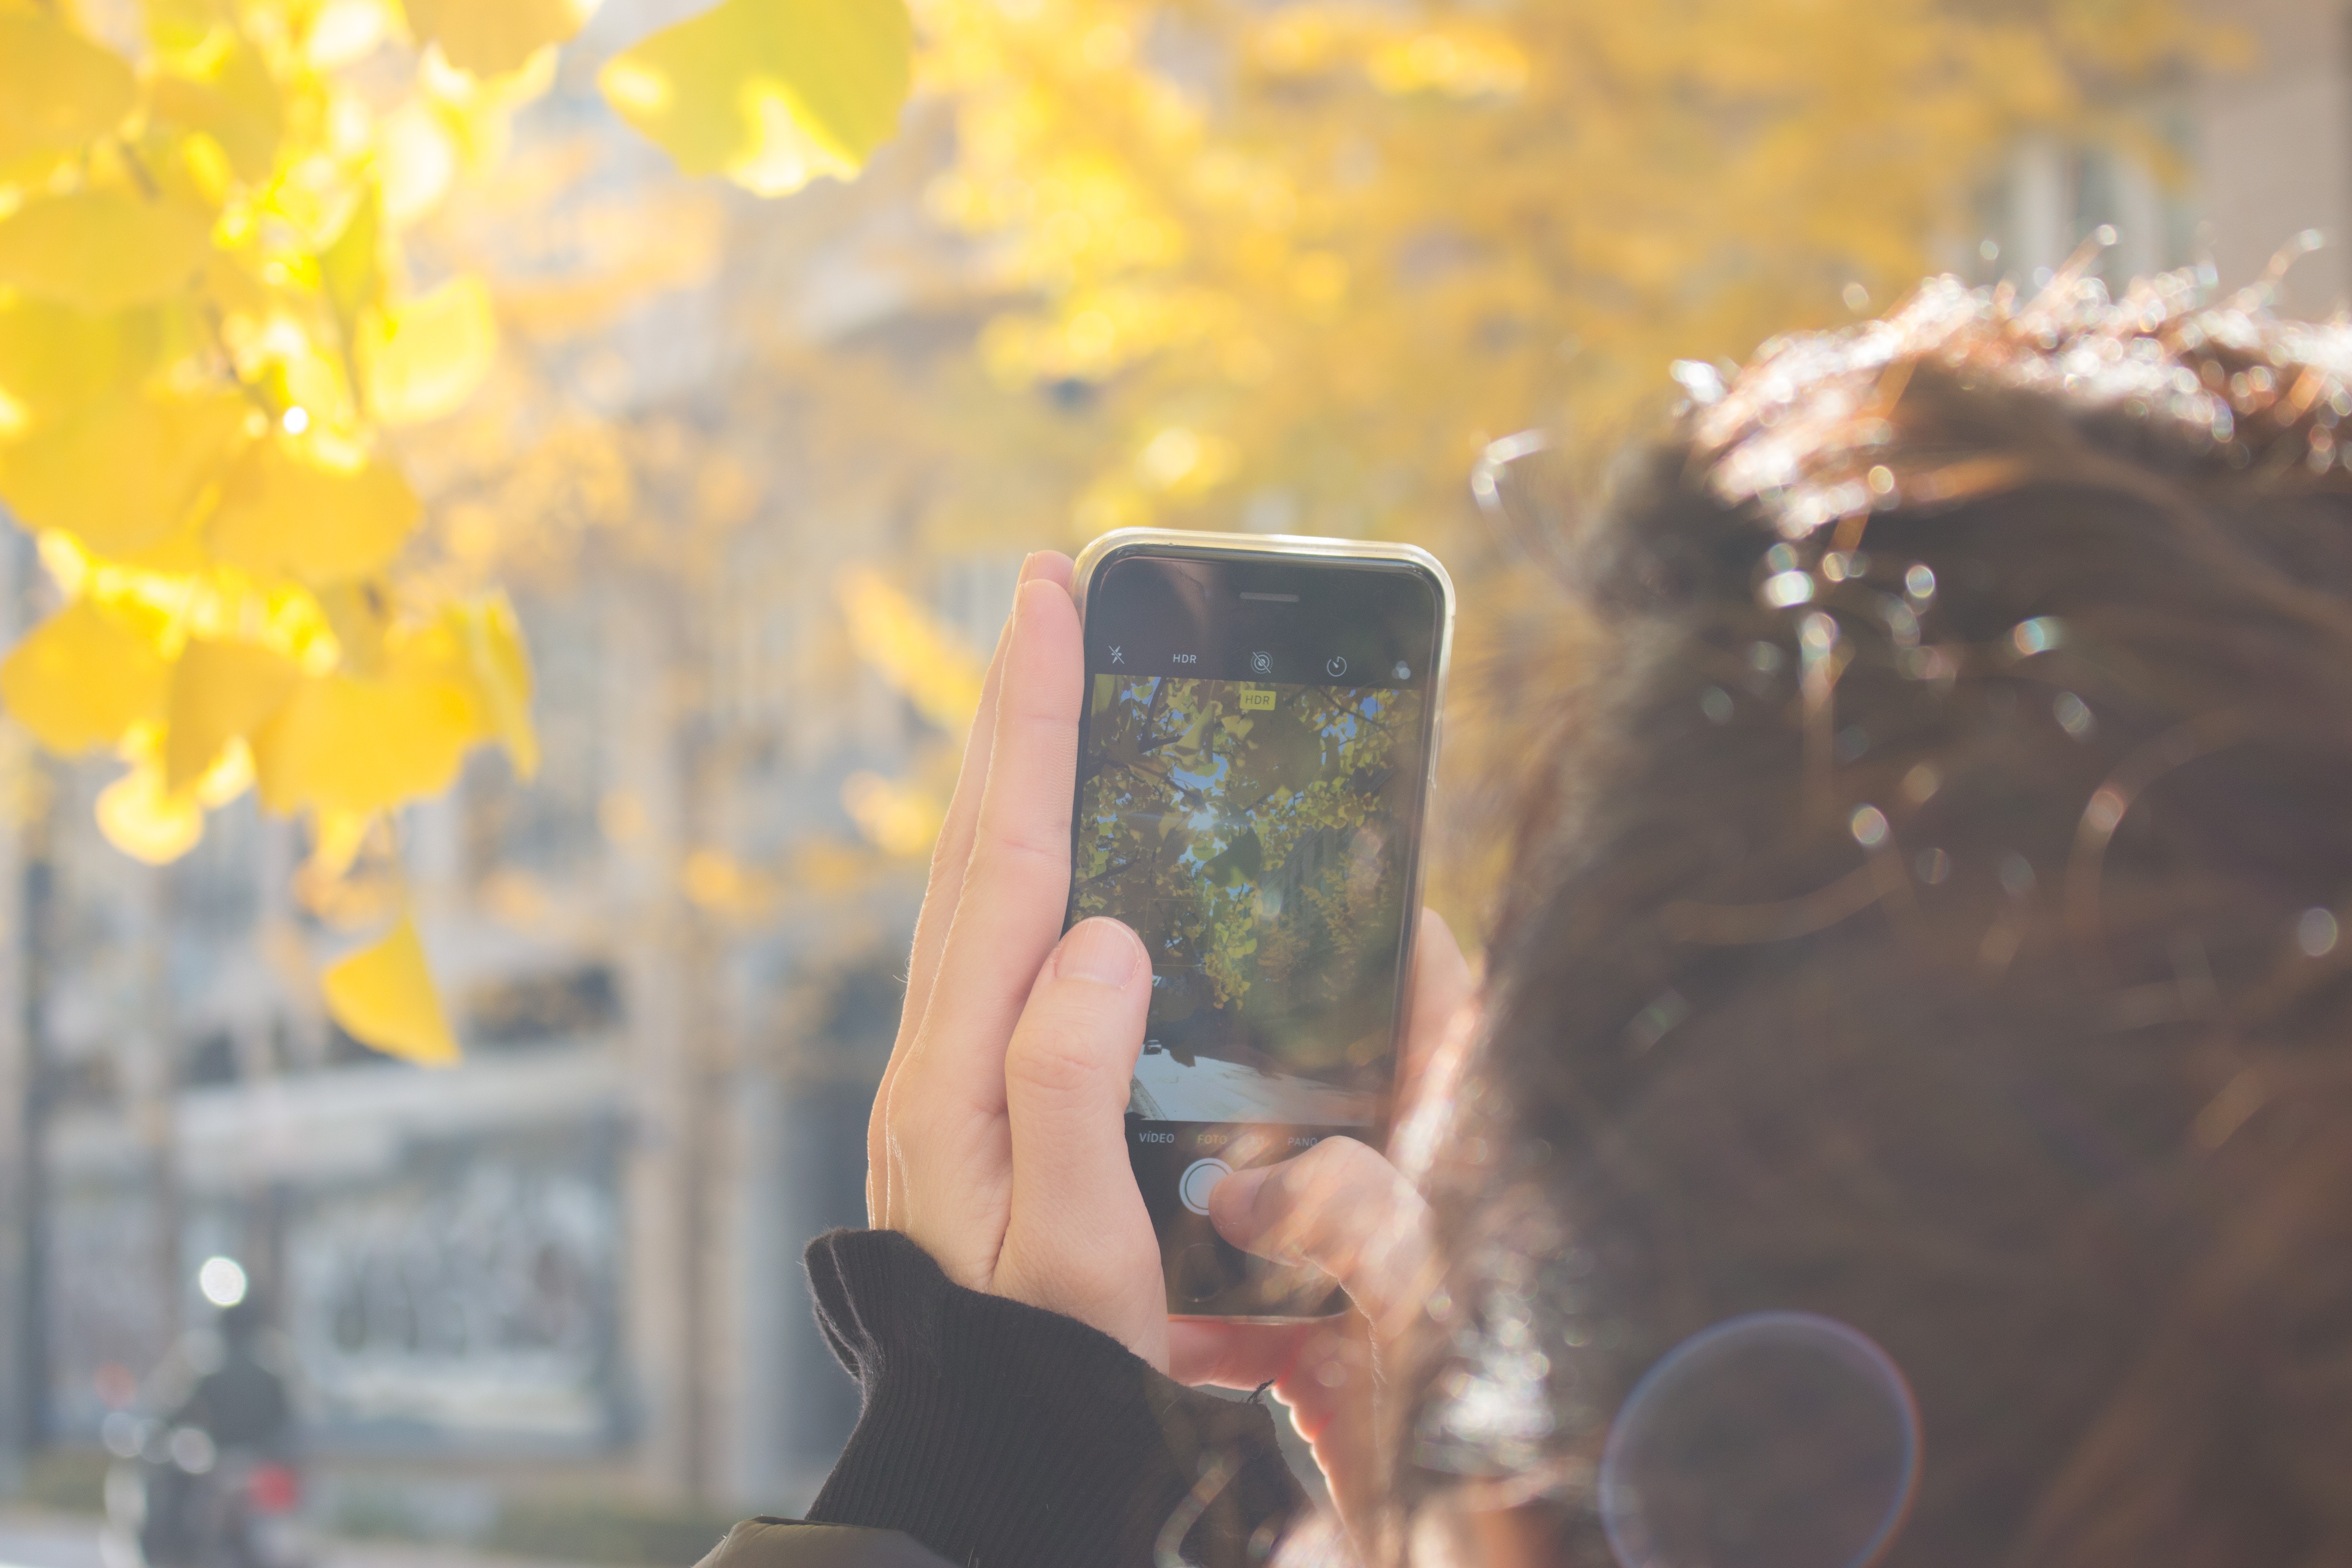 Man wearing black jacket using iphone taking picture of green leaf tree photo